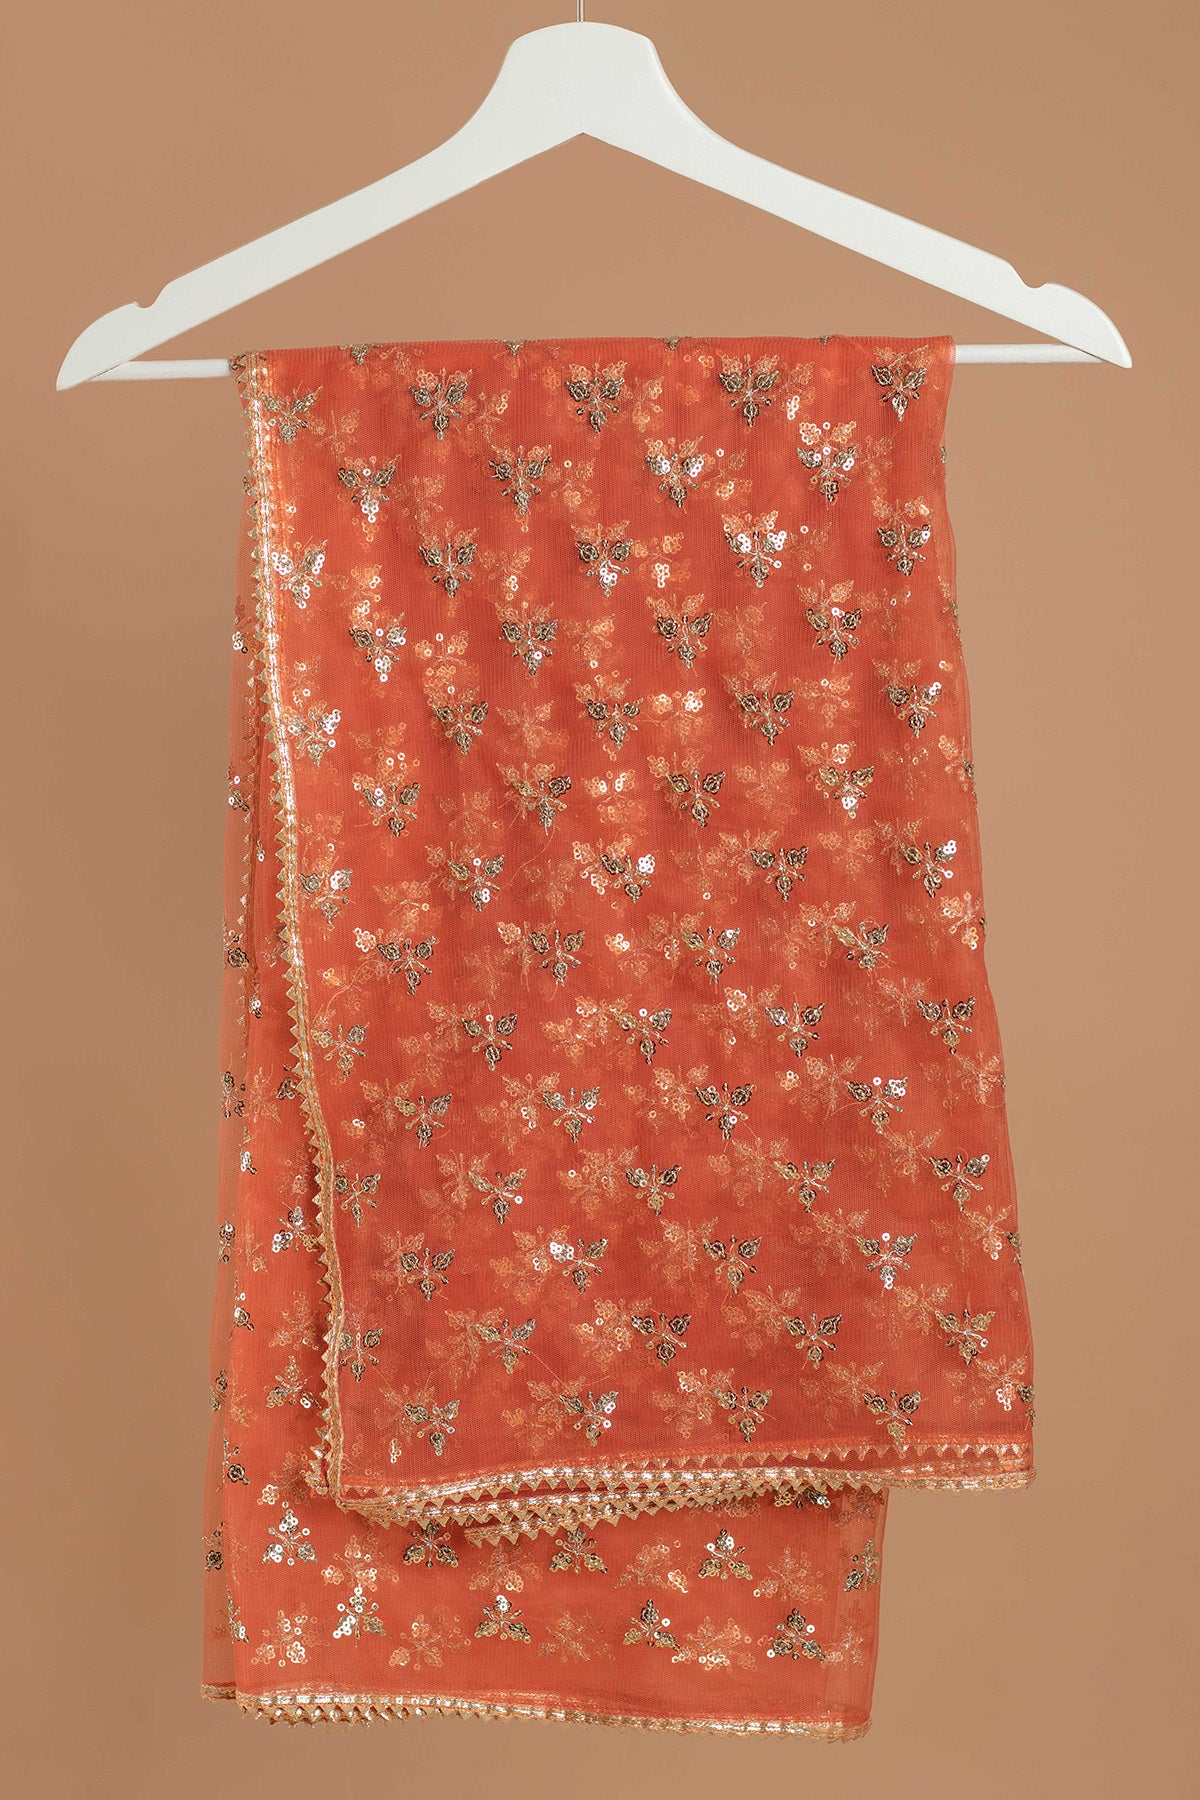 orange-gold-toned-ethnic-motifs-embroidered-dupatta